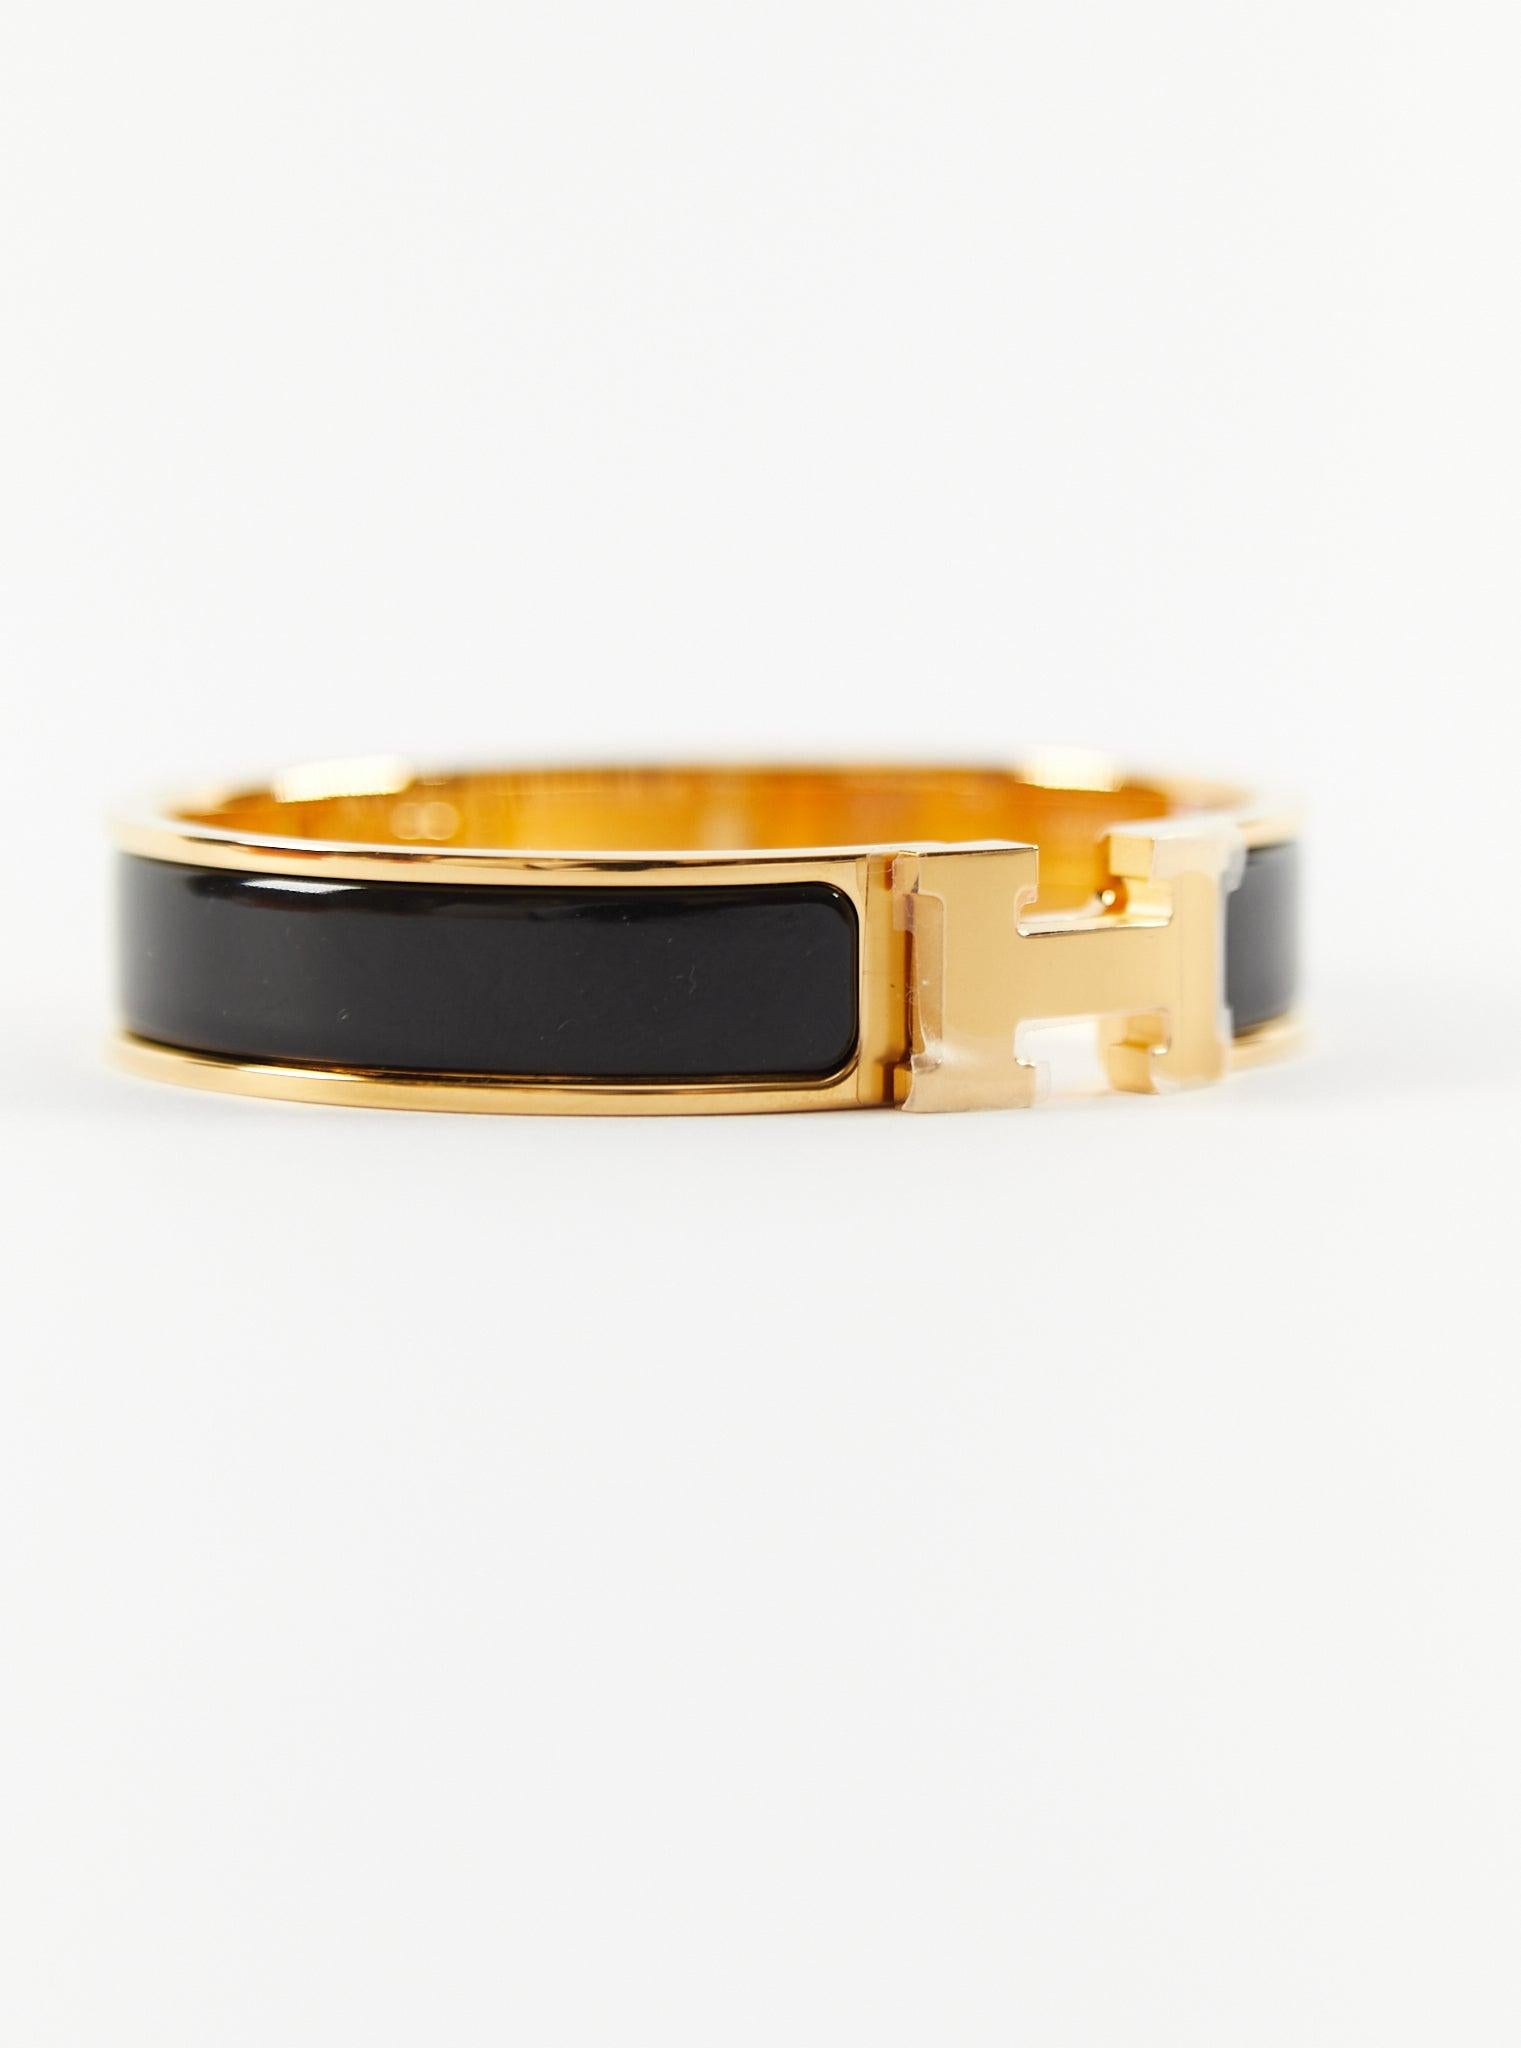 Hermès Clic H PM Bracelet in Black and Gold

Wrist size: 16.8 cm  Width: 12 mm

Made in France